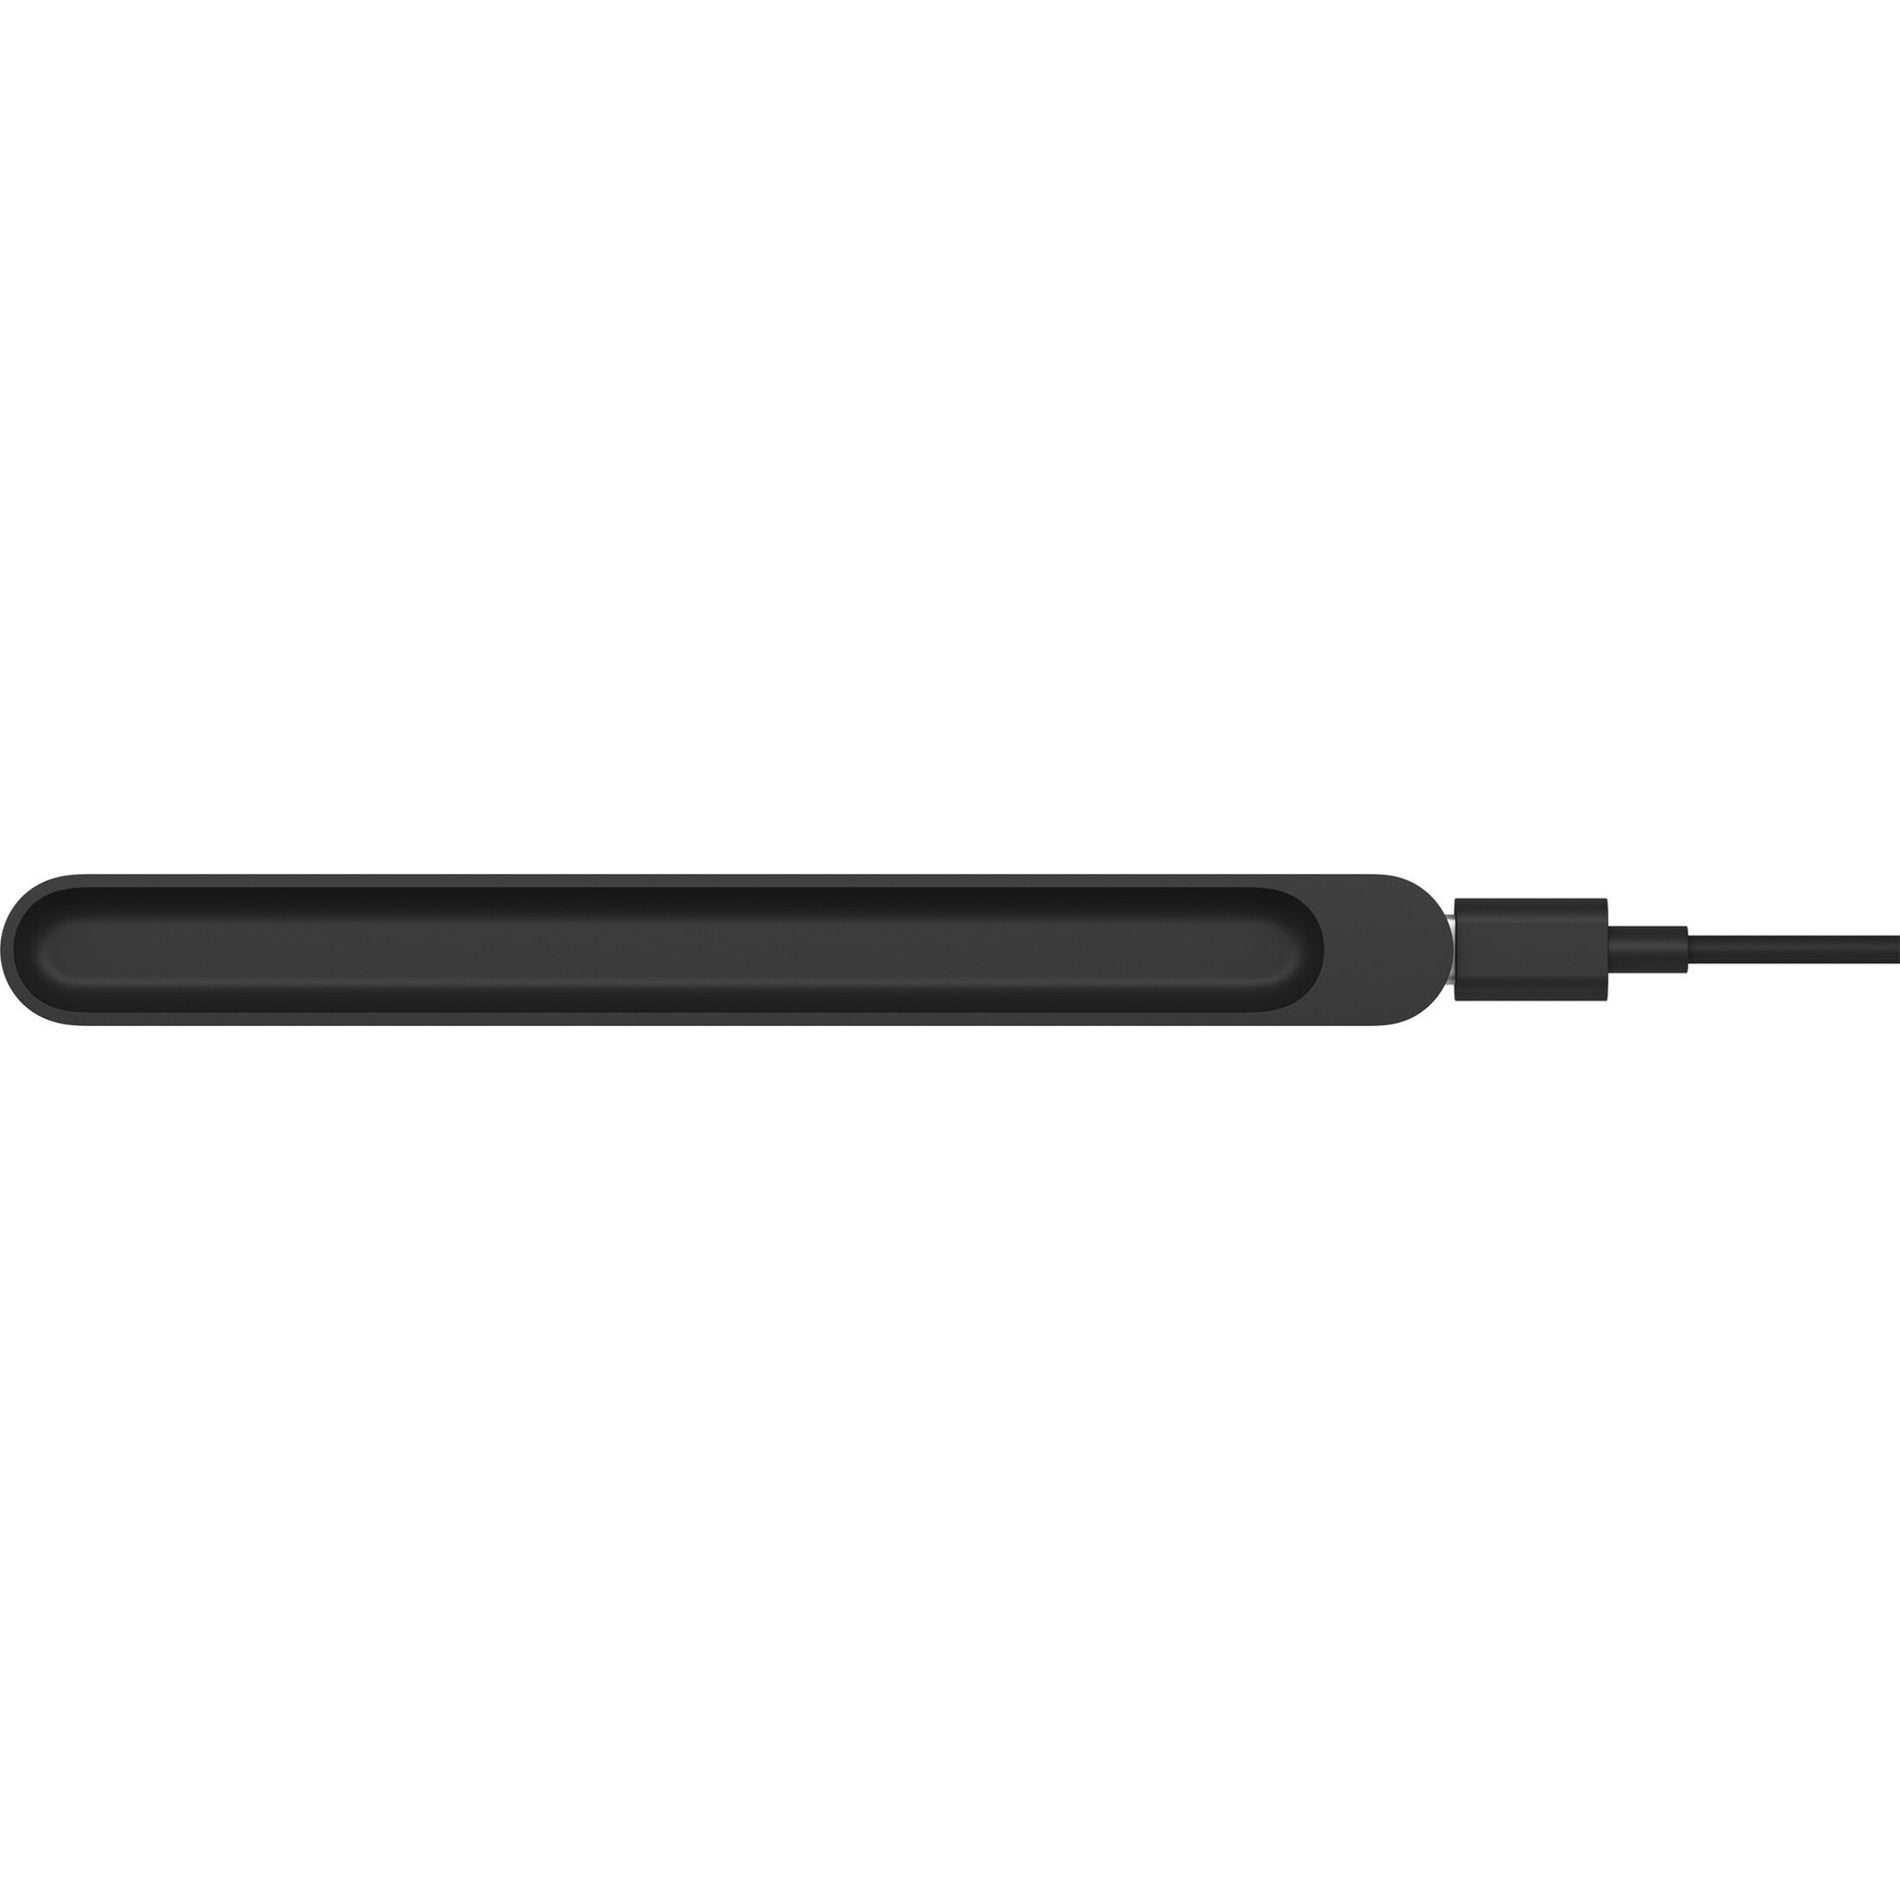 Microsoft 8X3-00001 Surface Slim Pen Charger, USB-A Cable, Matte Black